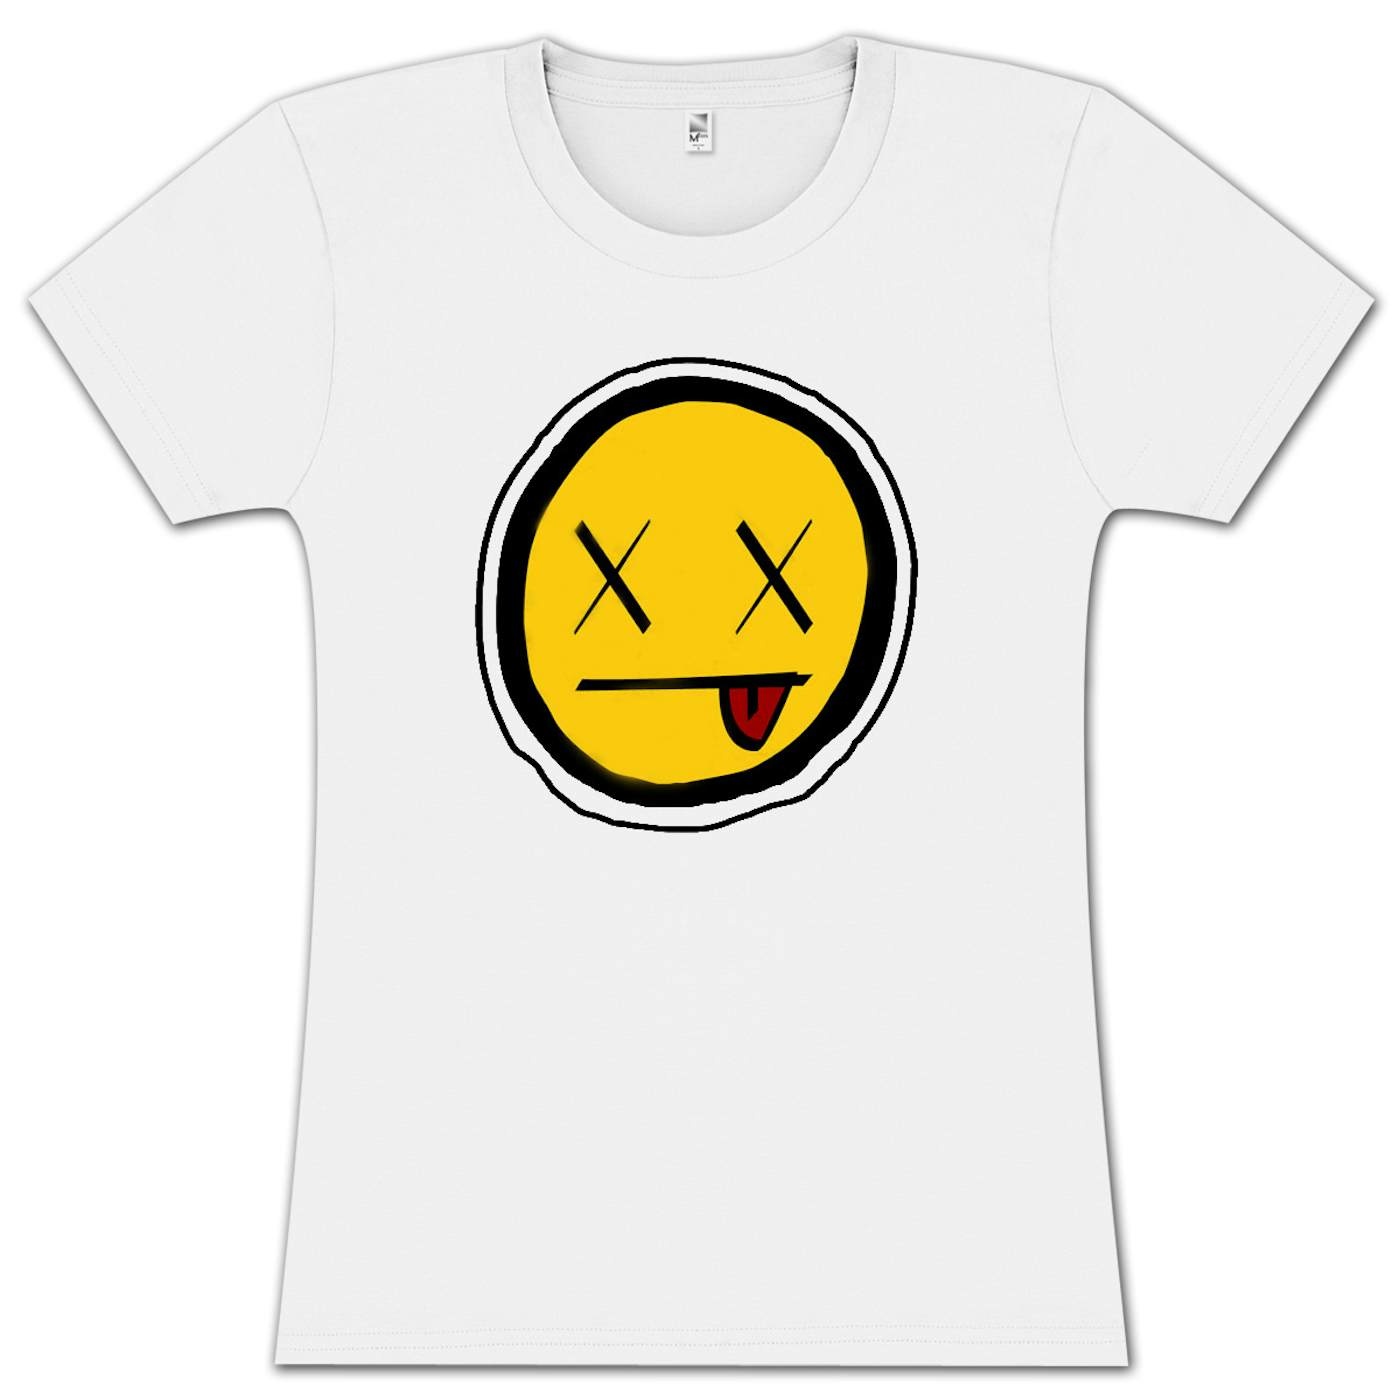 Modestep X Eyes Jr T-Shirt